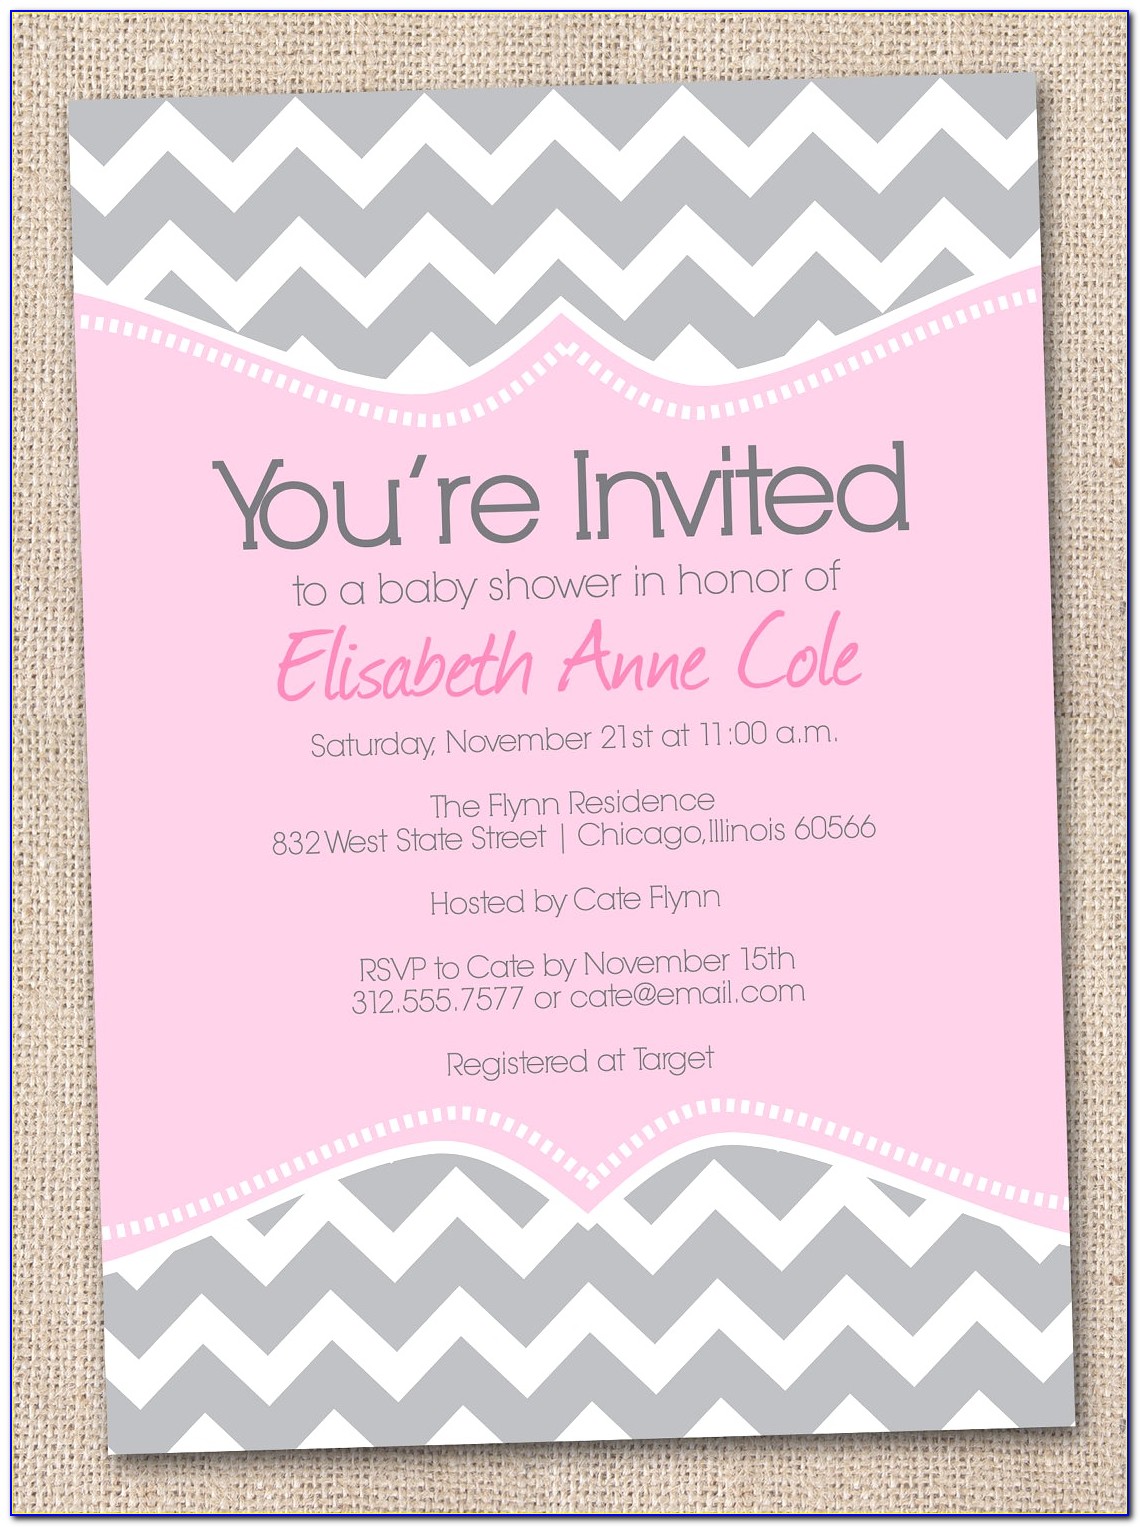 Create An Evite Invitation